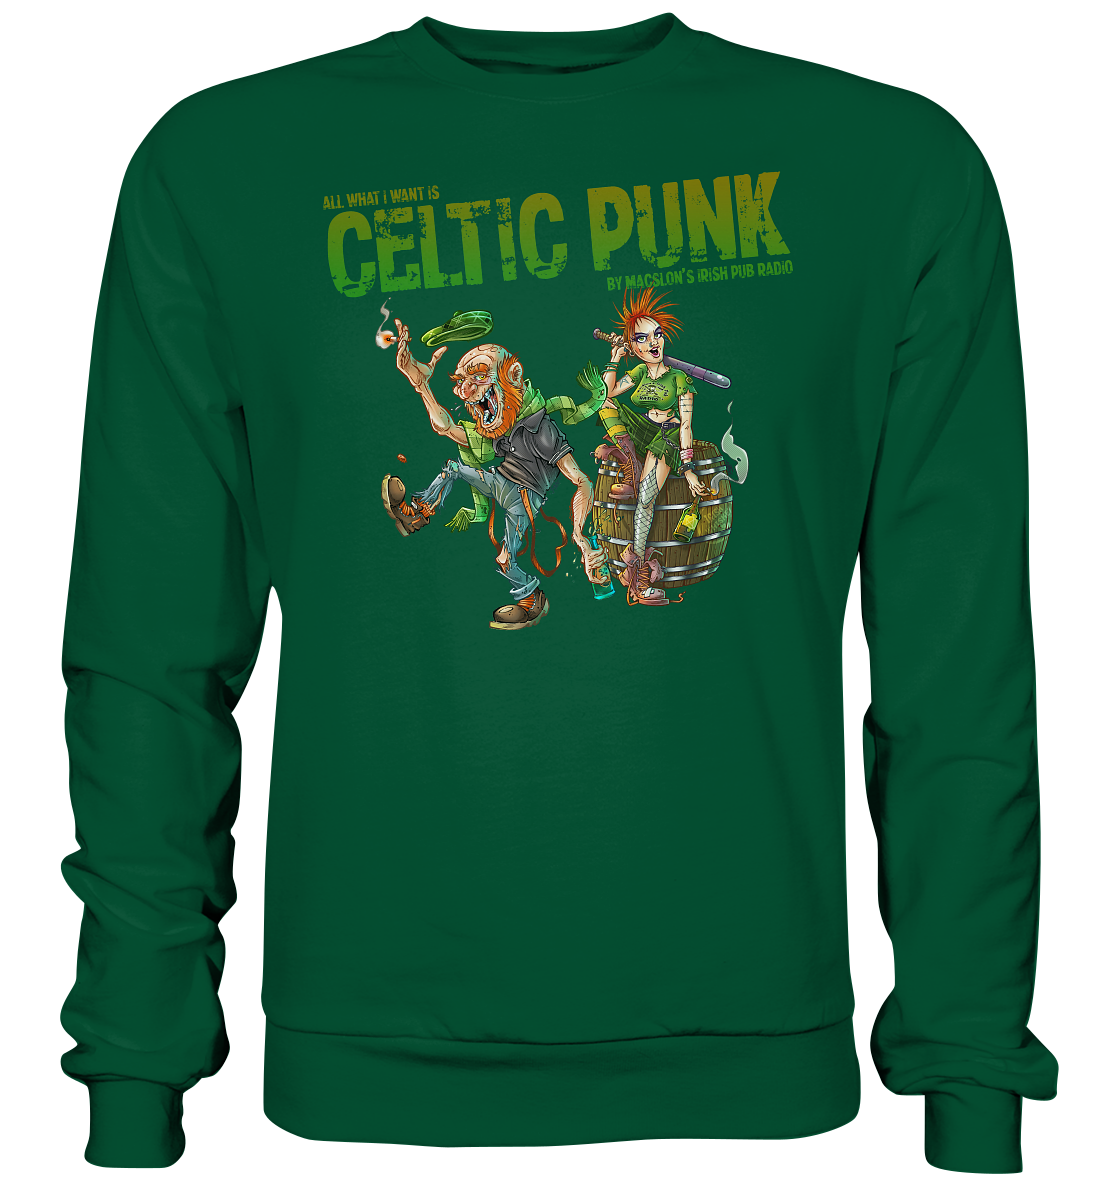 All What I Want Is "Celtic Punk" - Basic Sweatshirt